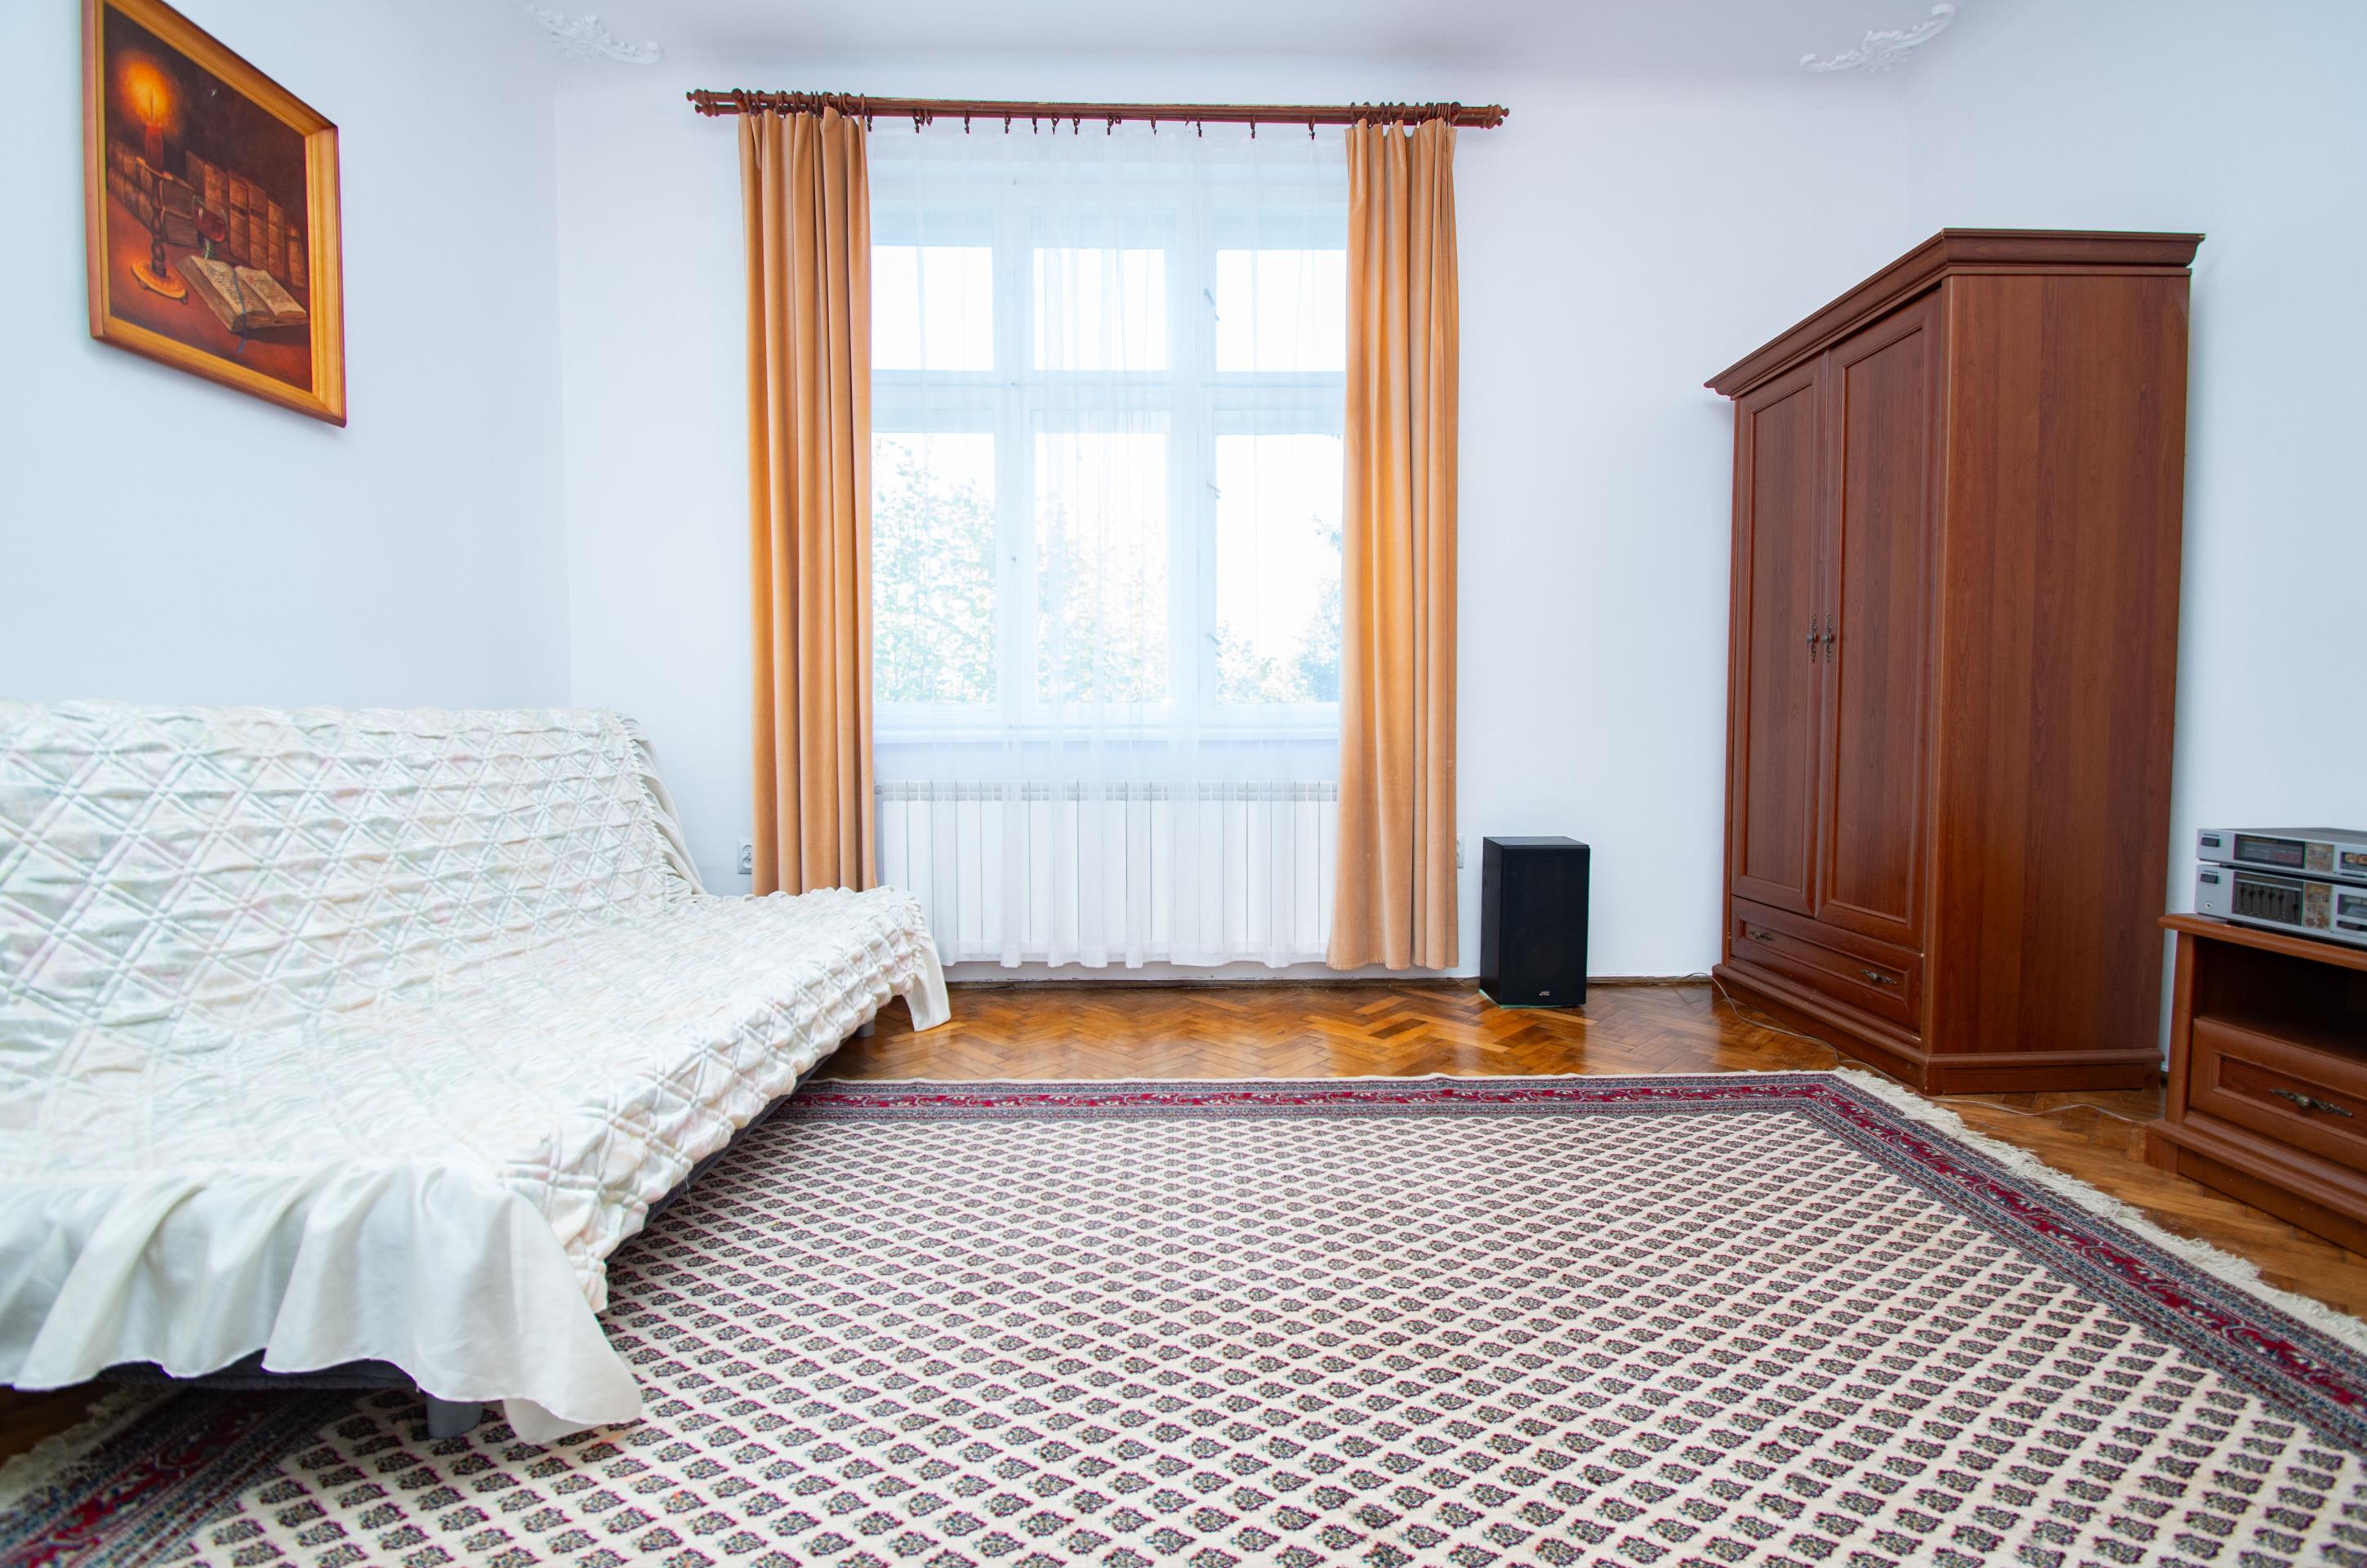 Rząska – First floor in a villa for rent